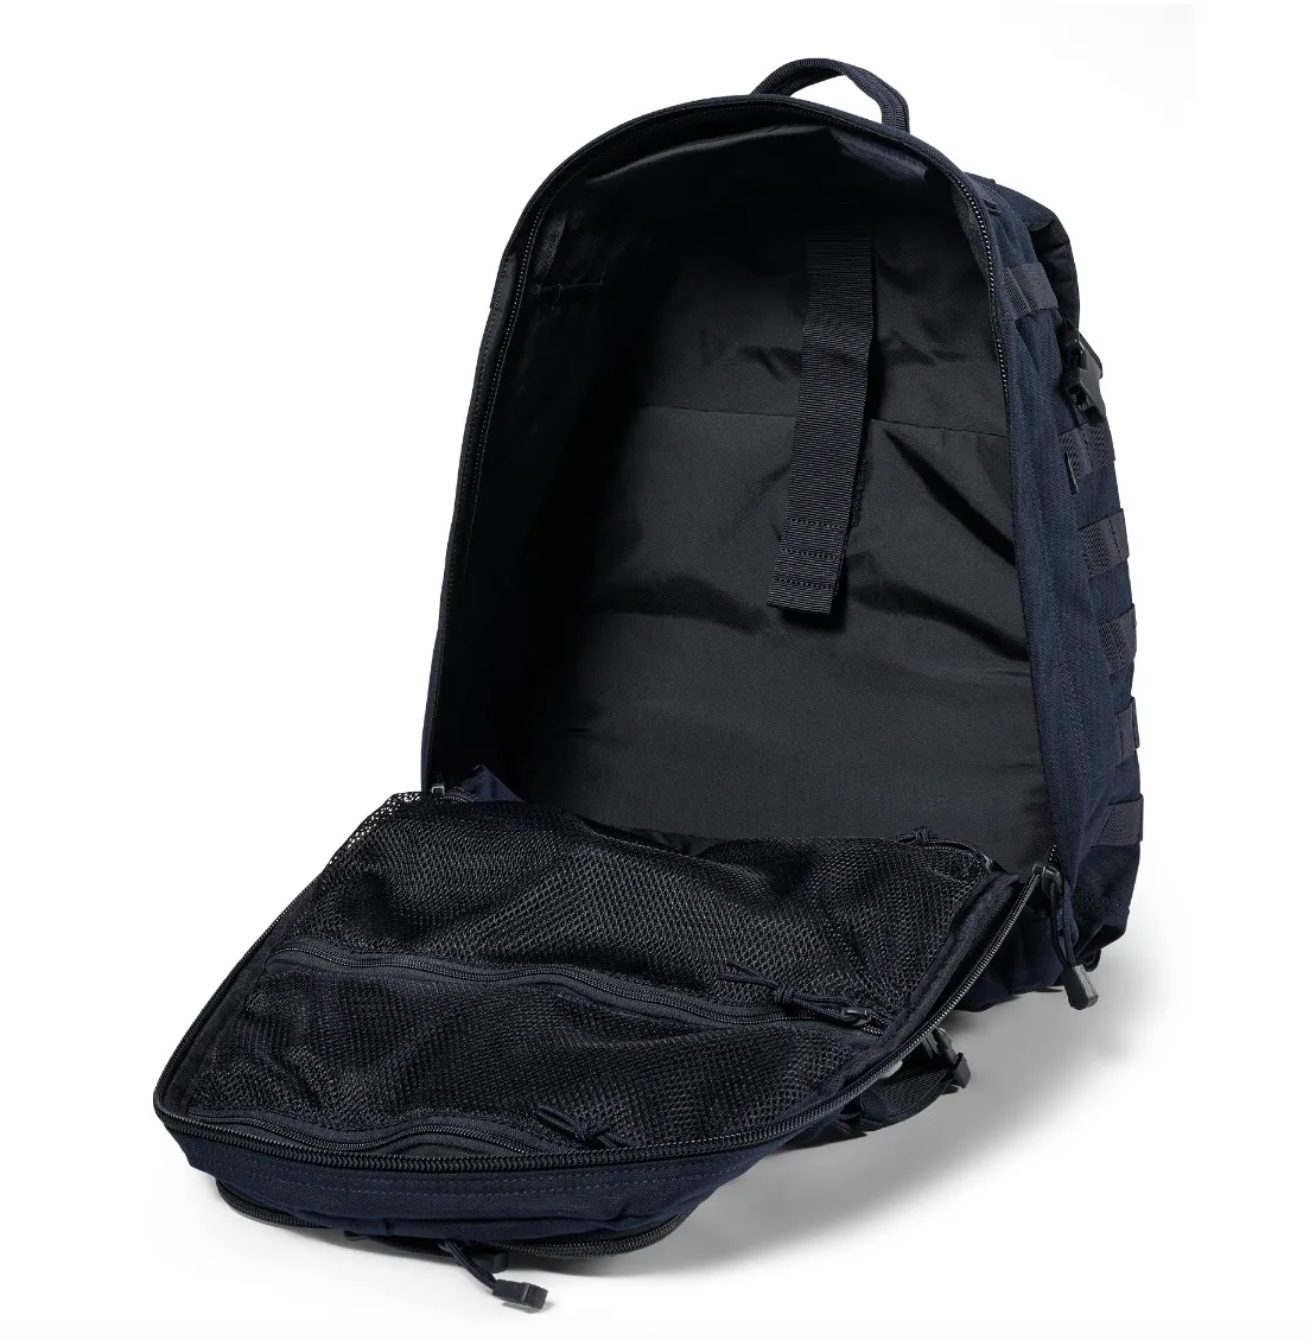 5.11 - Rush24 2.0 - Backpack 37L - Dark Navy (724)